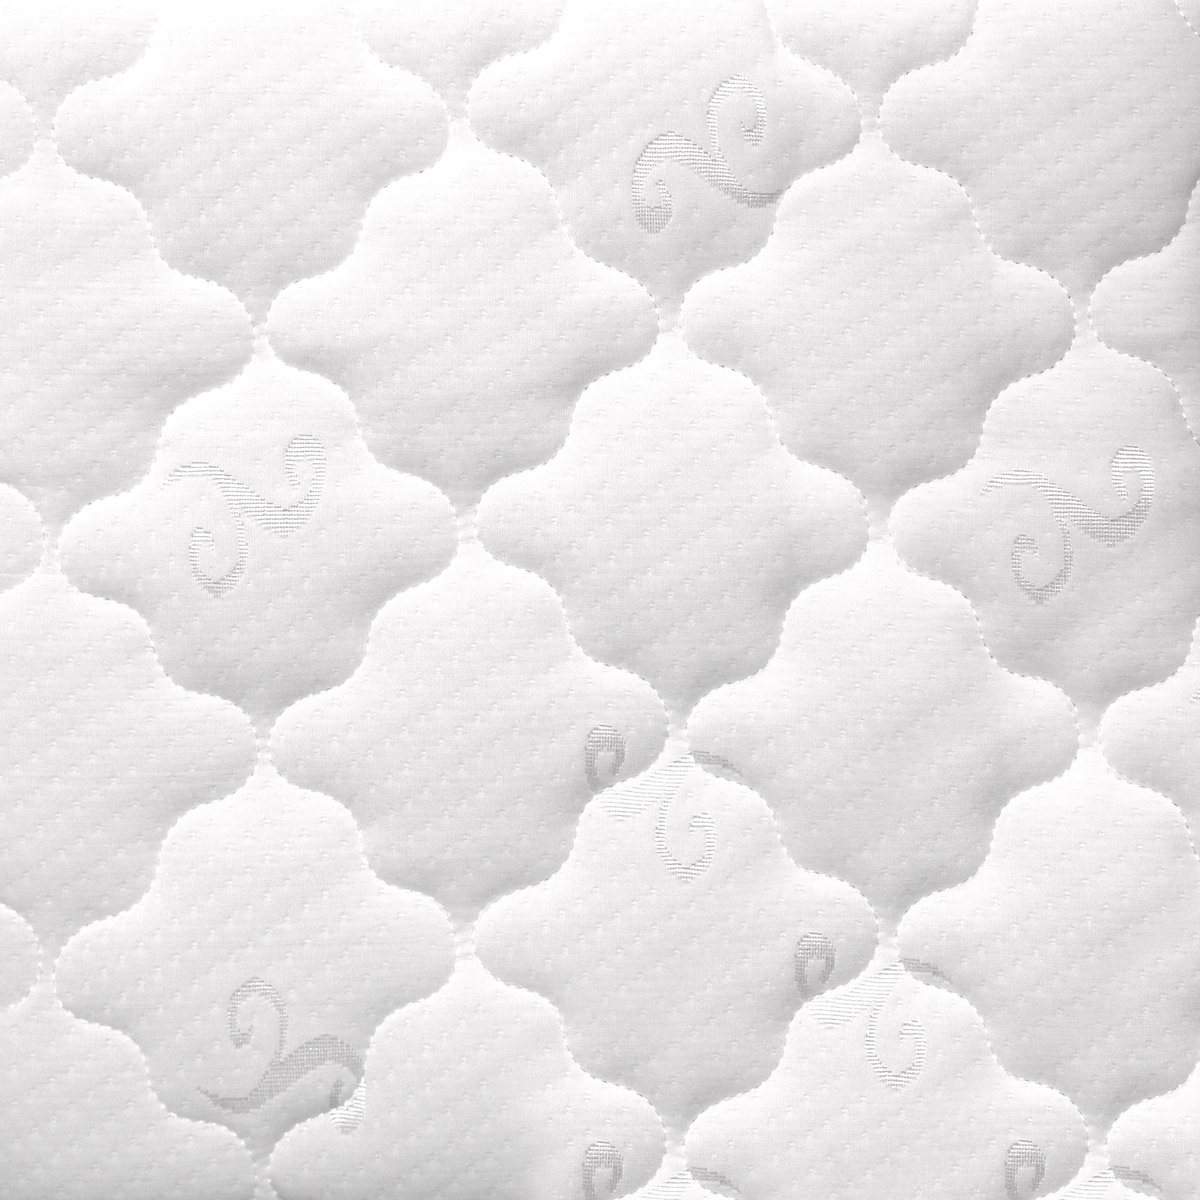 Cotton Home Fancy Bonel Spring Mattress 200x200+27cm-Pillow Top